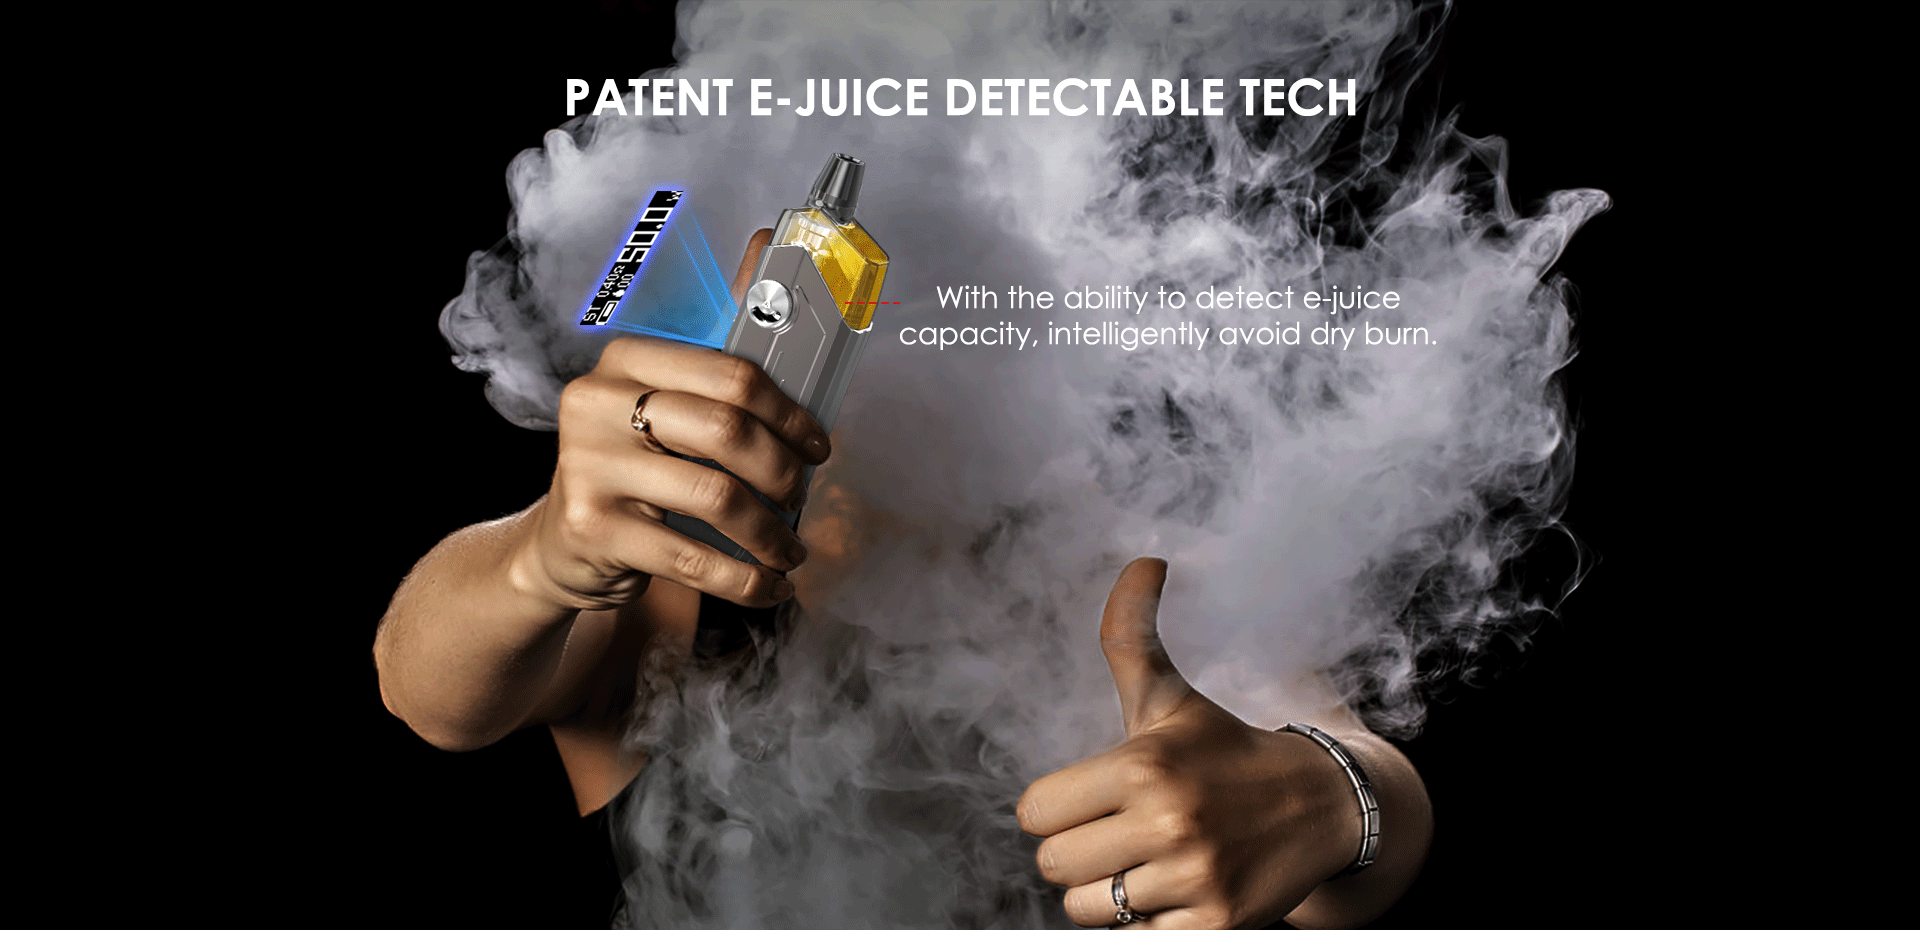 COLD STEEL AK47 Patent E-juice Detectable Tech